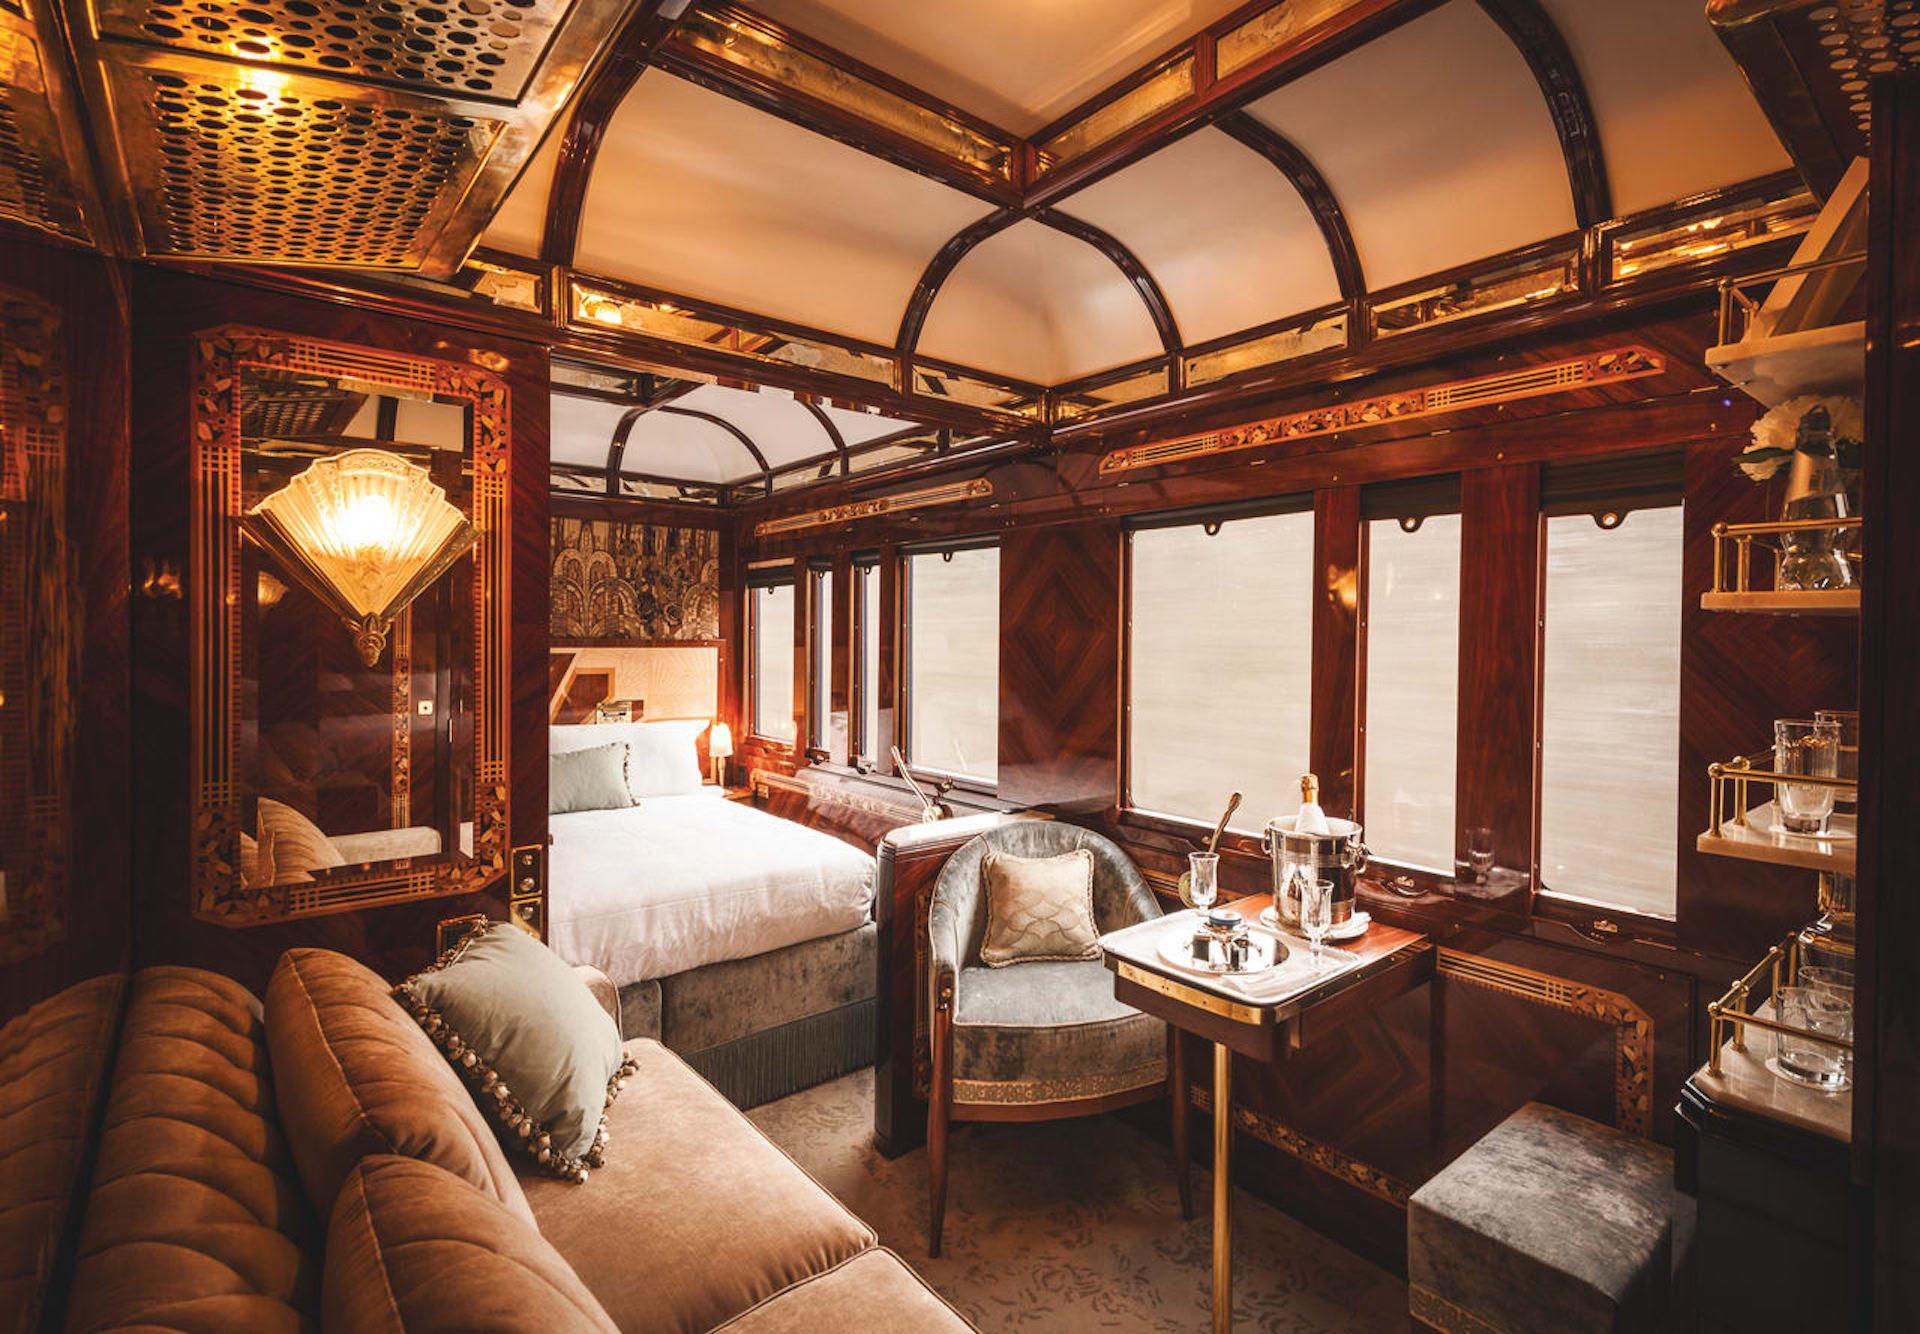 All Aboard! Belmond Reimagines Luxury Suites on the Venice Simplon-Orient-Express